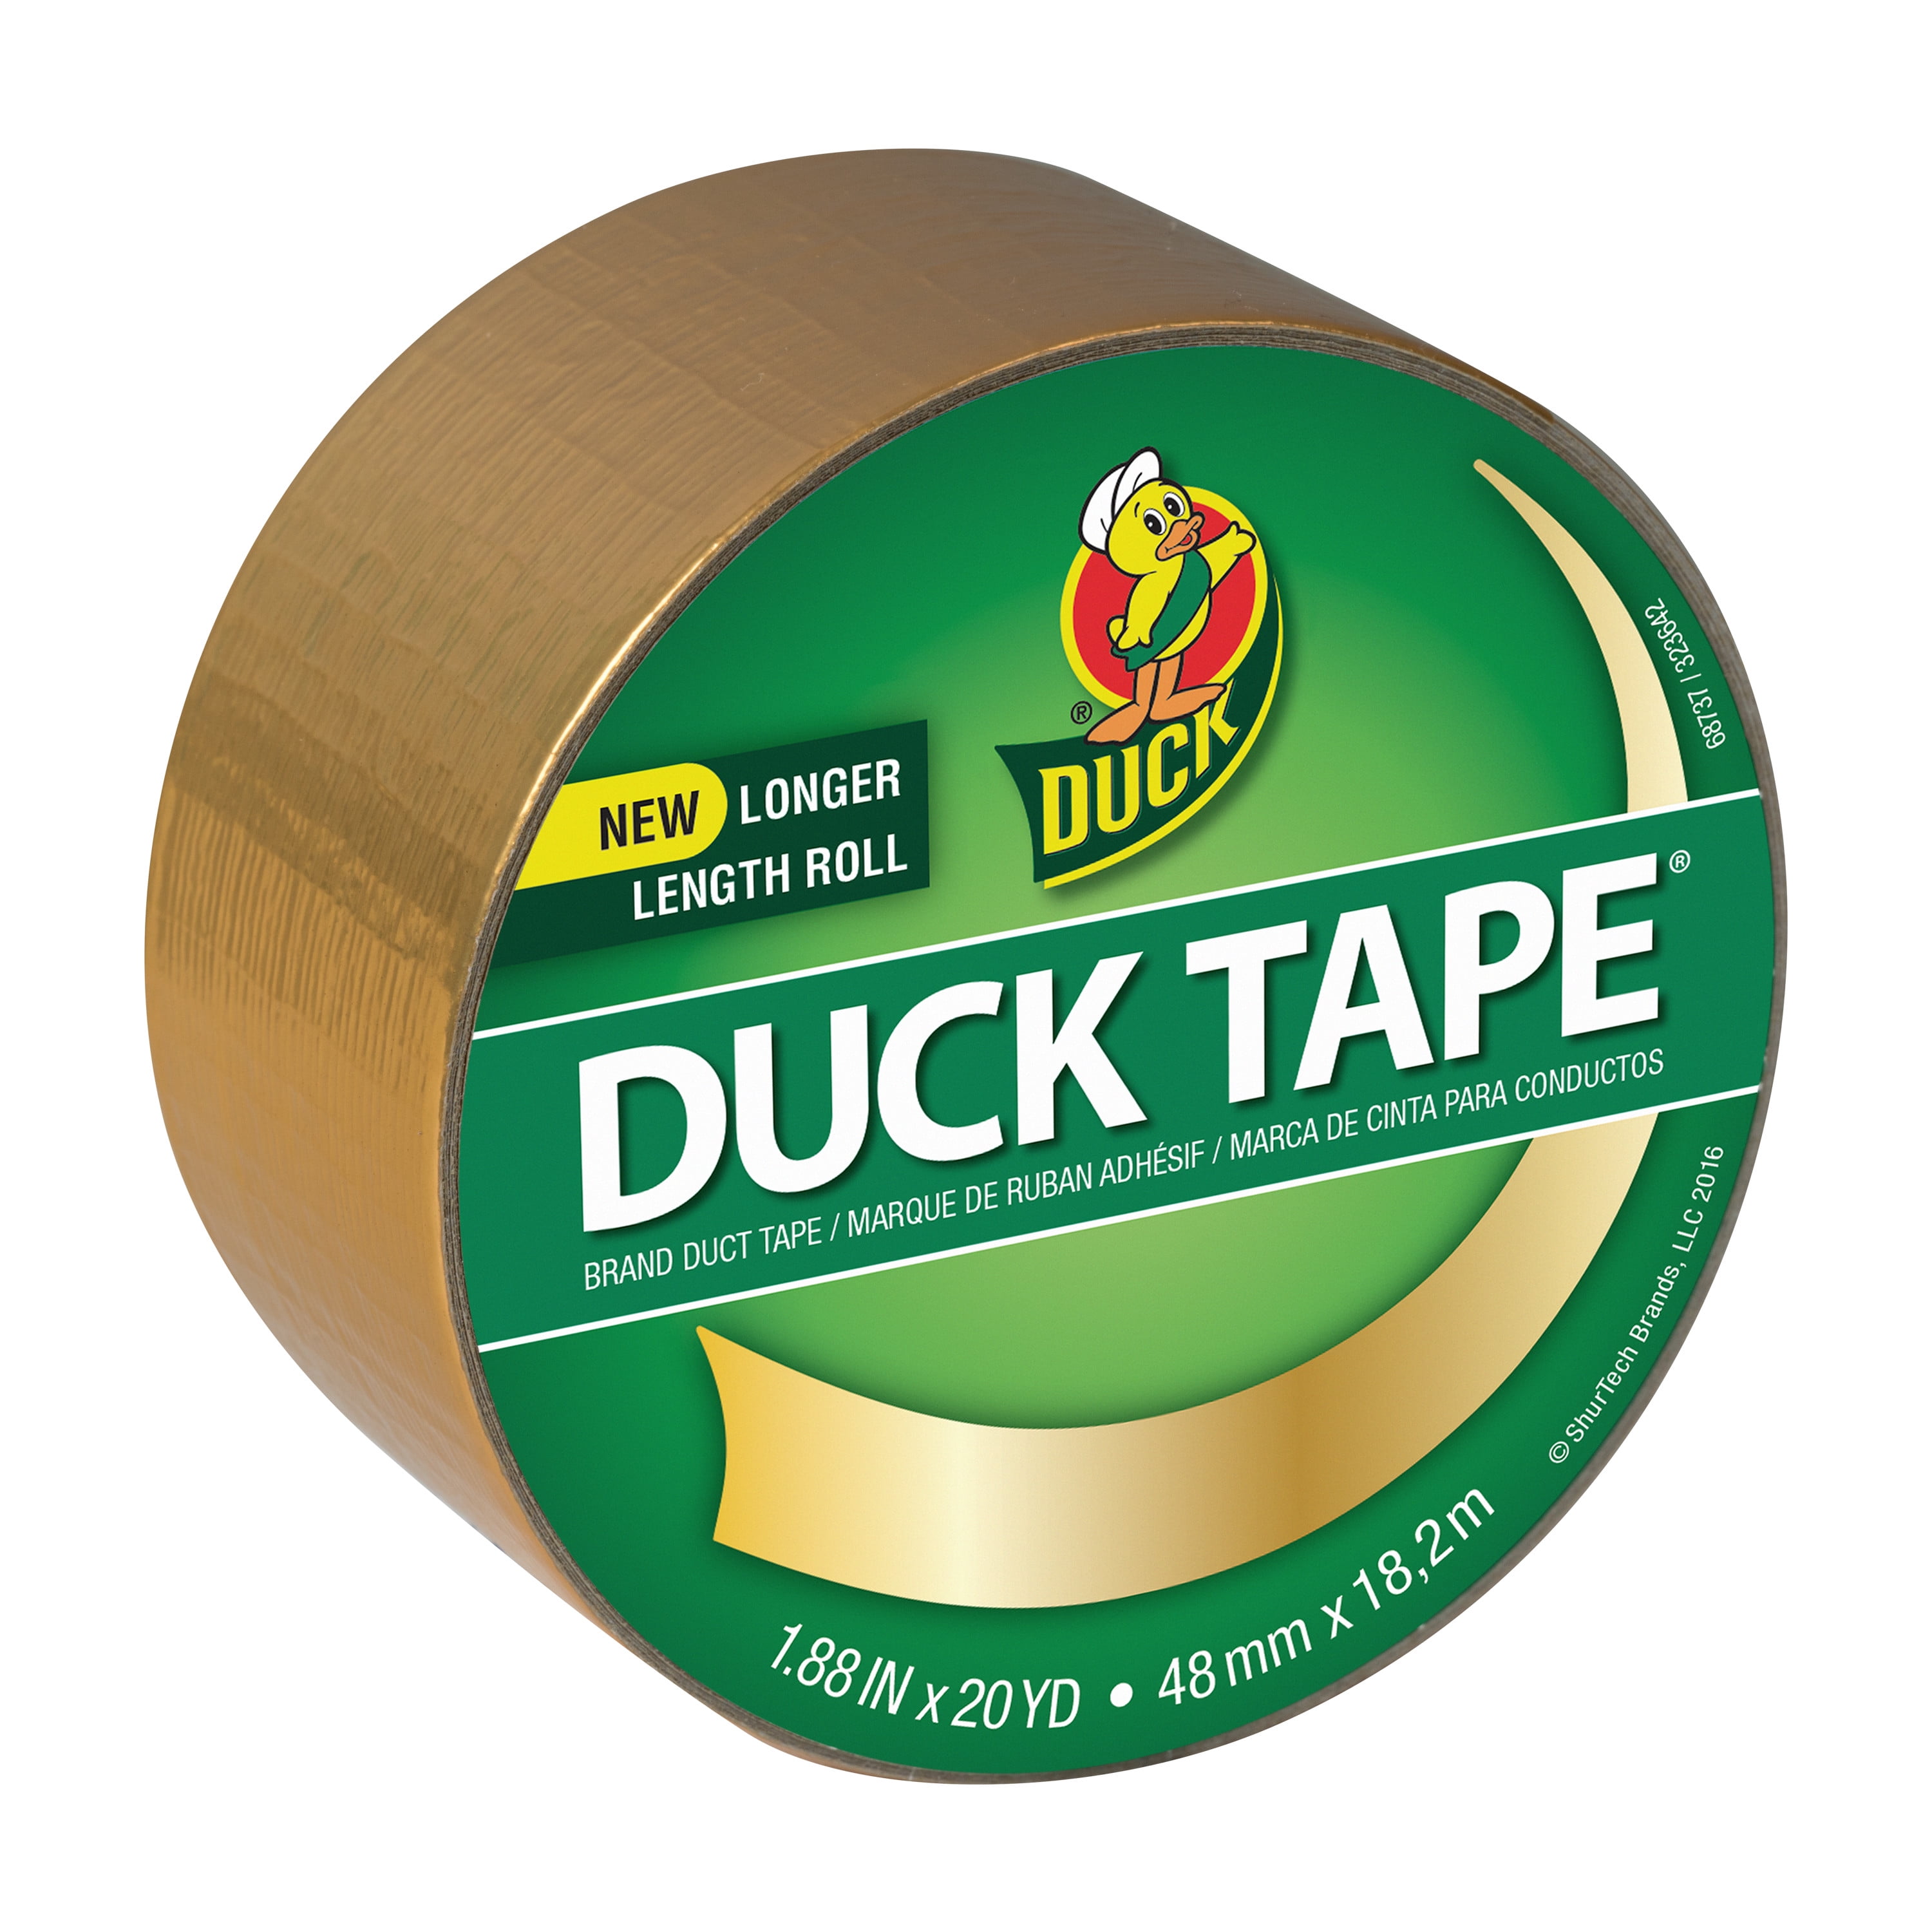 Metallic Duct Tape - Gold - 10 Yd